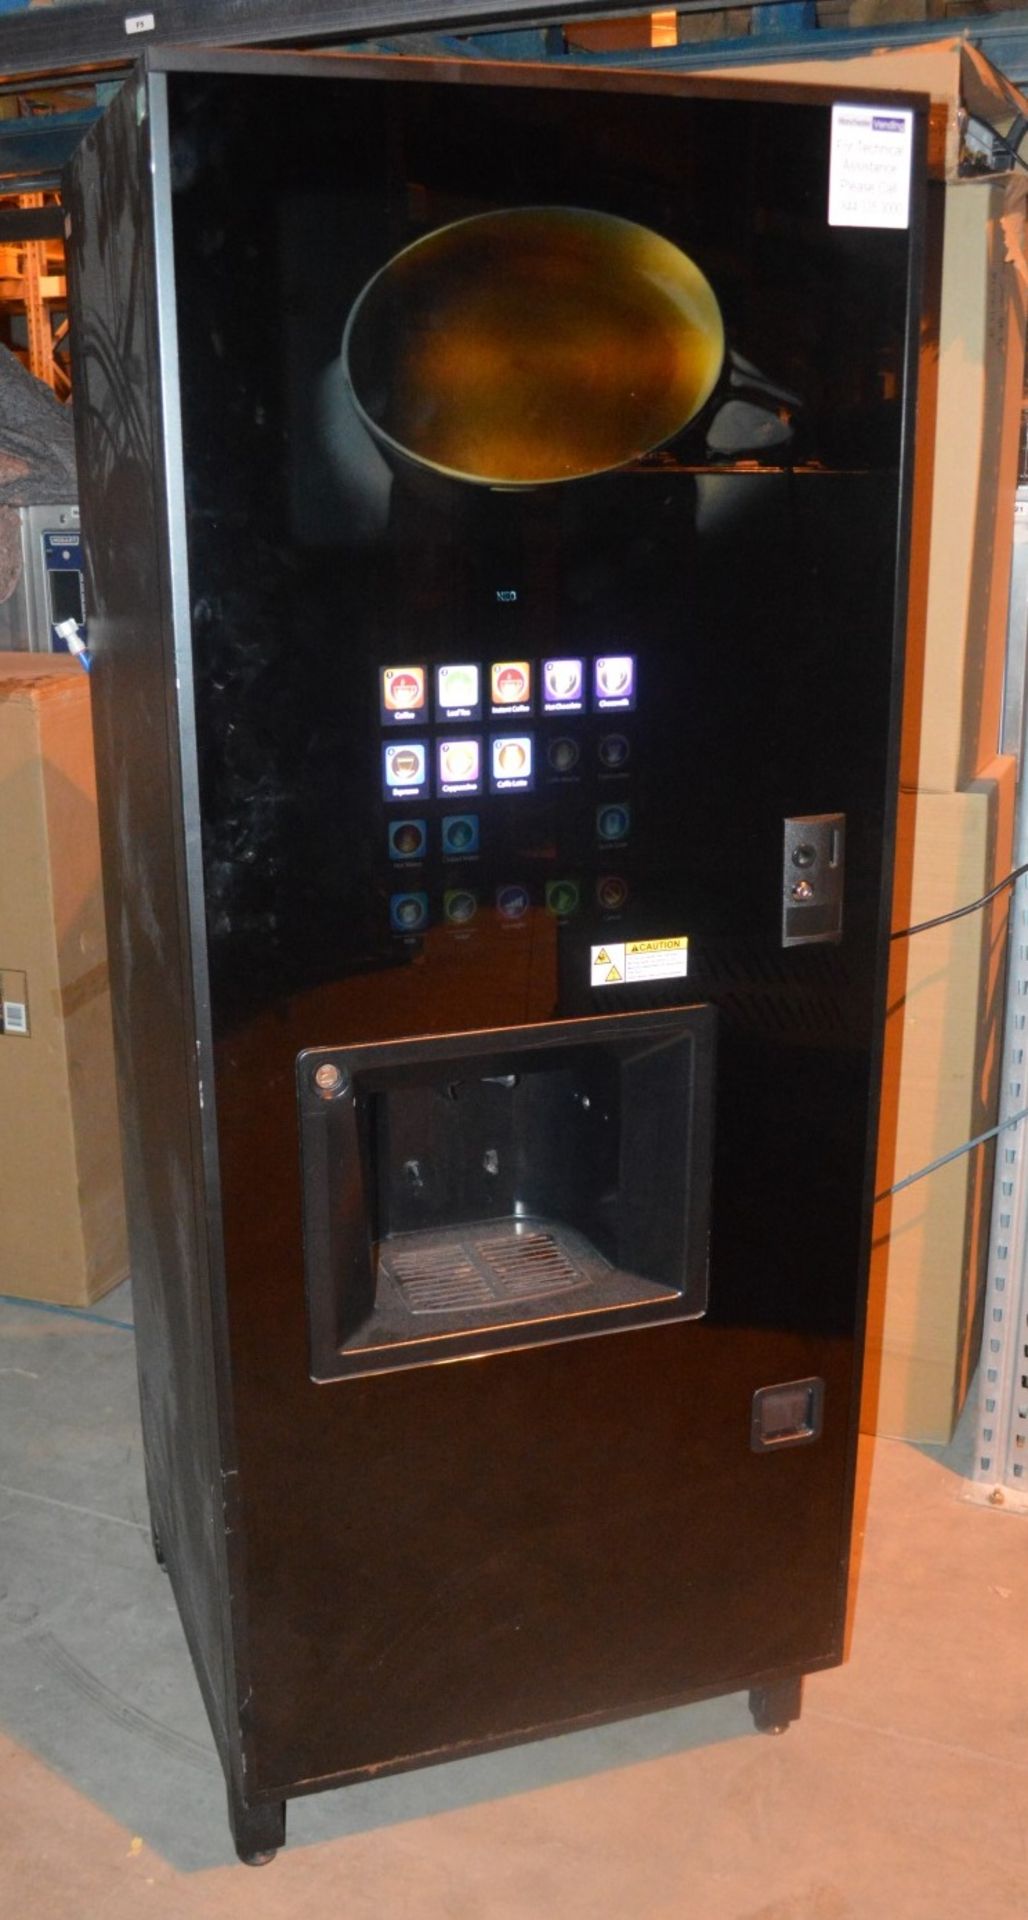 1 x COFFEETEK Touch Screen Instant Hot Drink Vending Machine - Model: Neo B2C (INSTANT TEA) CDS - Ve - Image 4 of 9